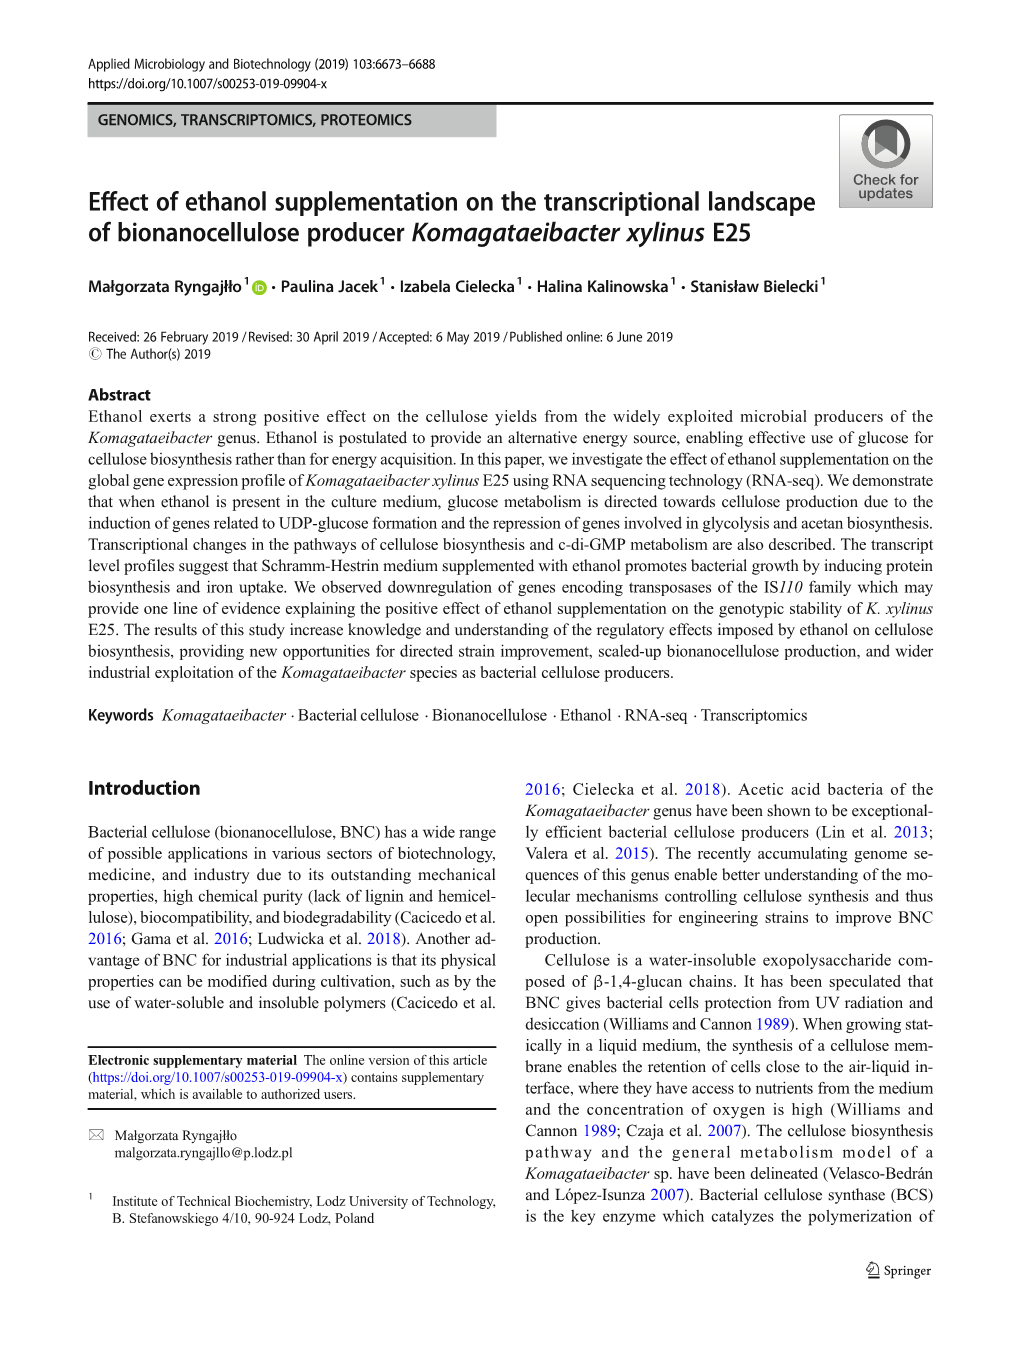 Effect of Ethanol Supplementation on the Transcriptional Landscape of Bionanocellulose Producer Komagataeibacter Xylinus E25